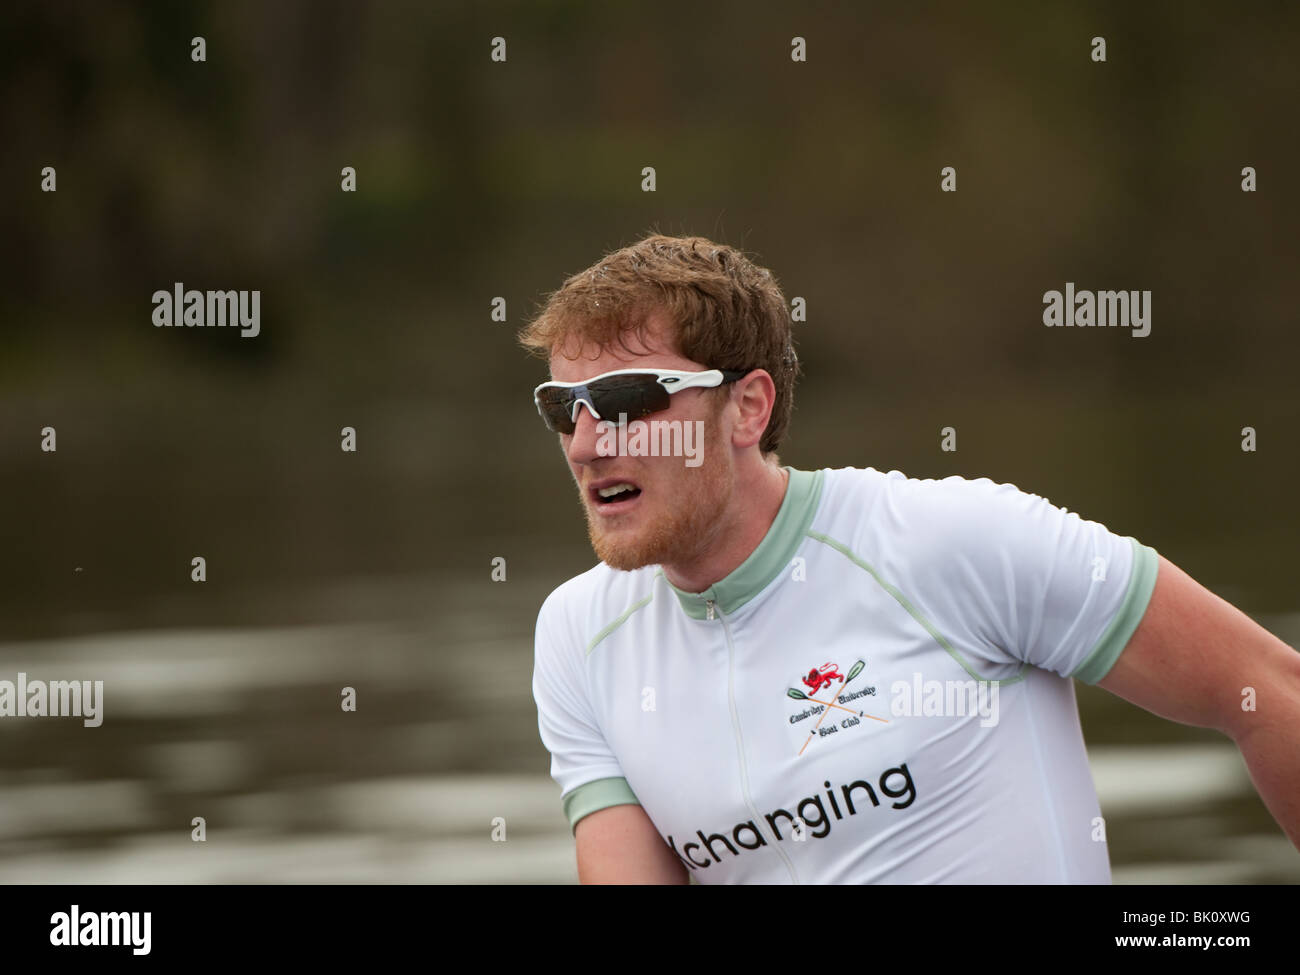 03/04/2010. The 156th Xchanging University Boat Race between Oxford University and Cambridge University Stock Photo